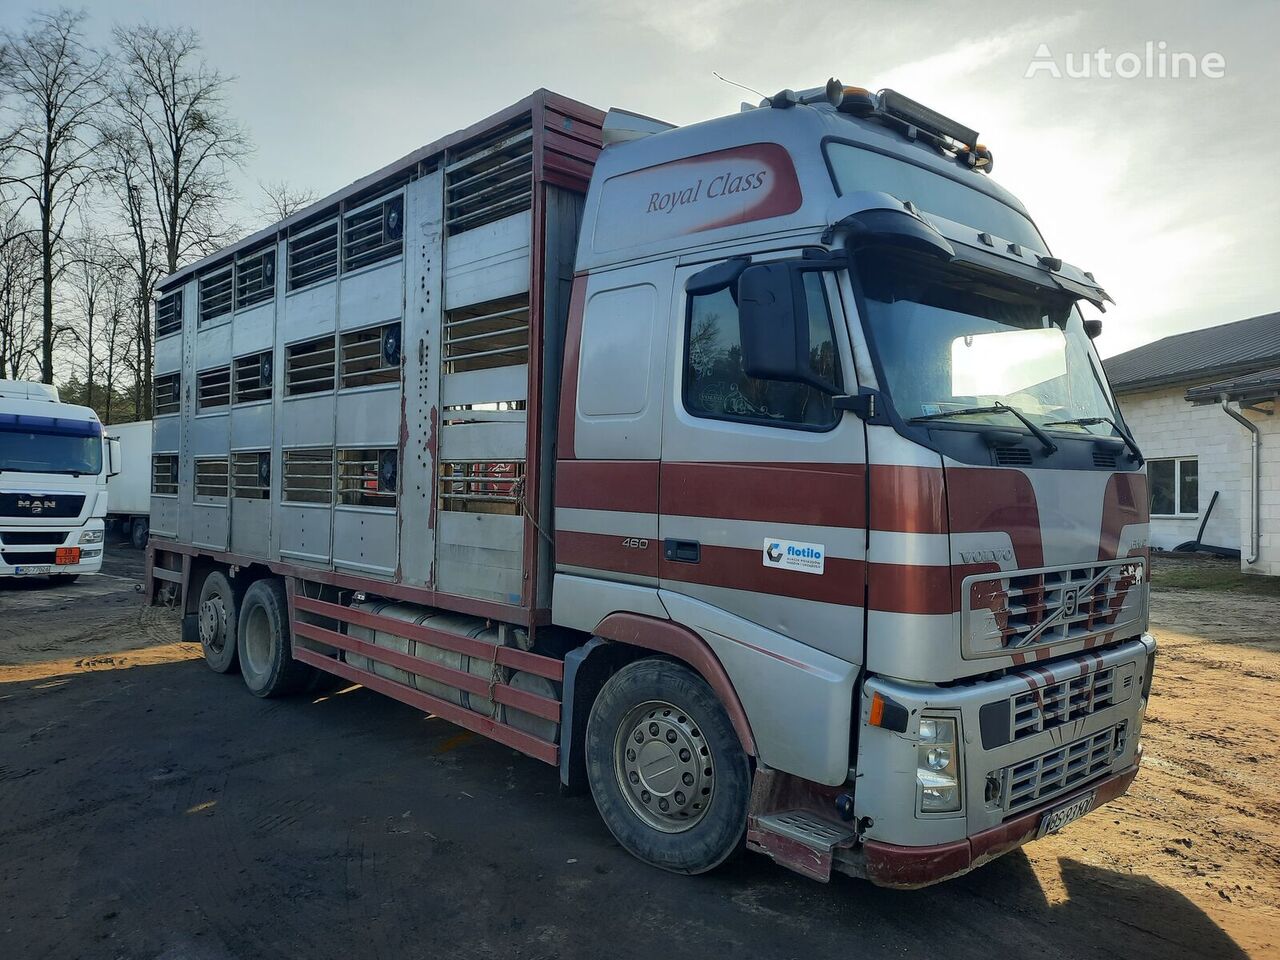 Volvo FH12 livestock truck